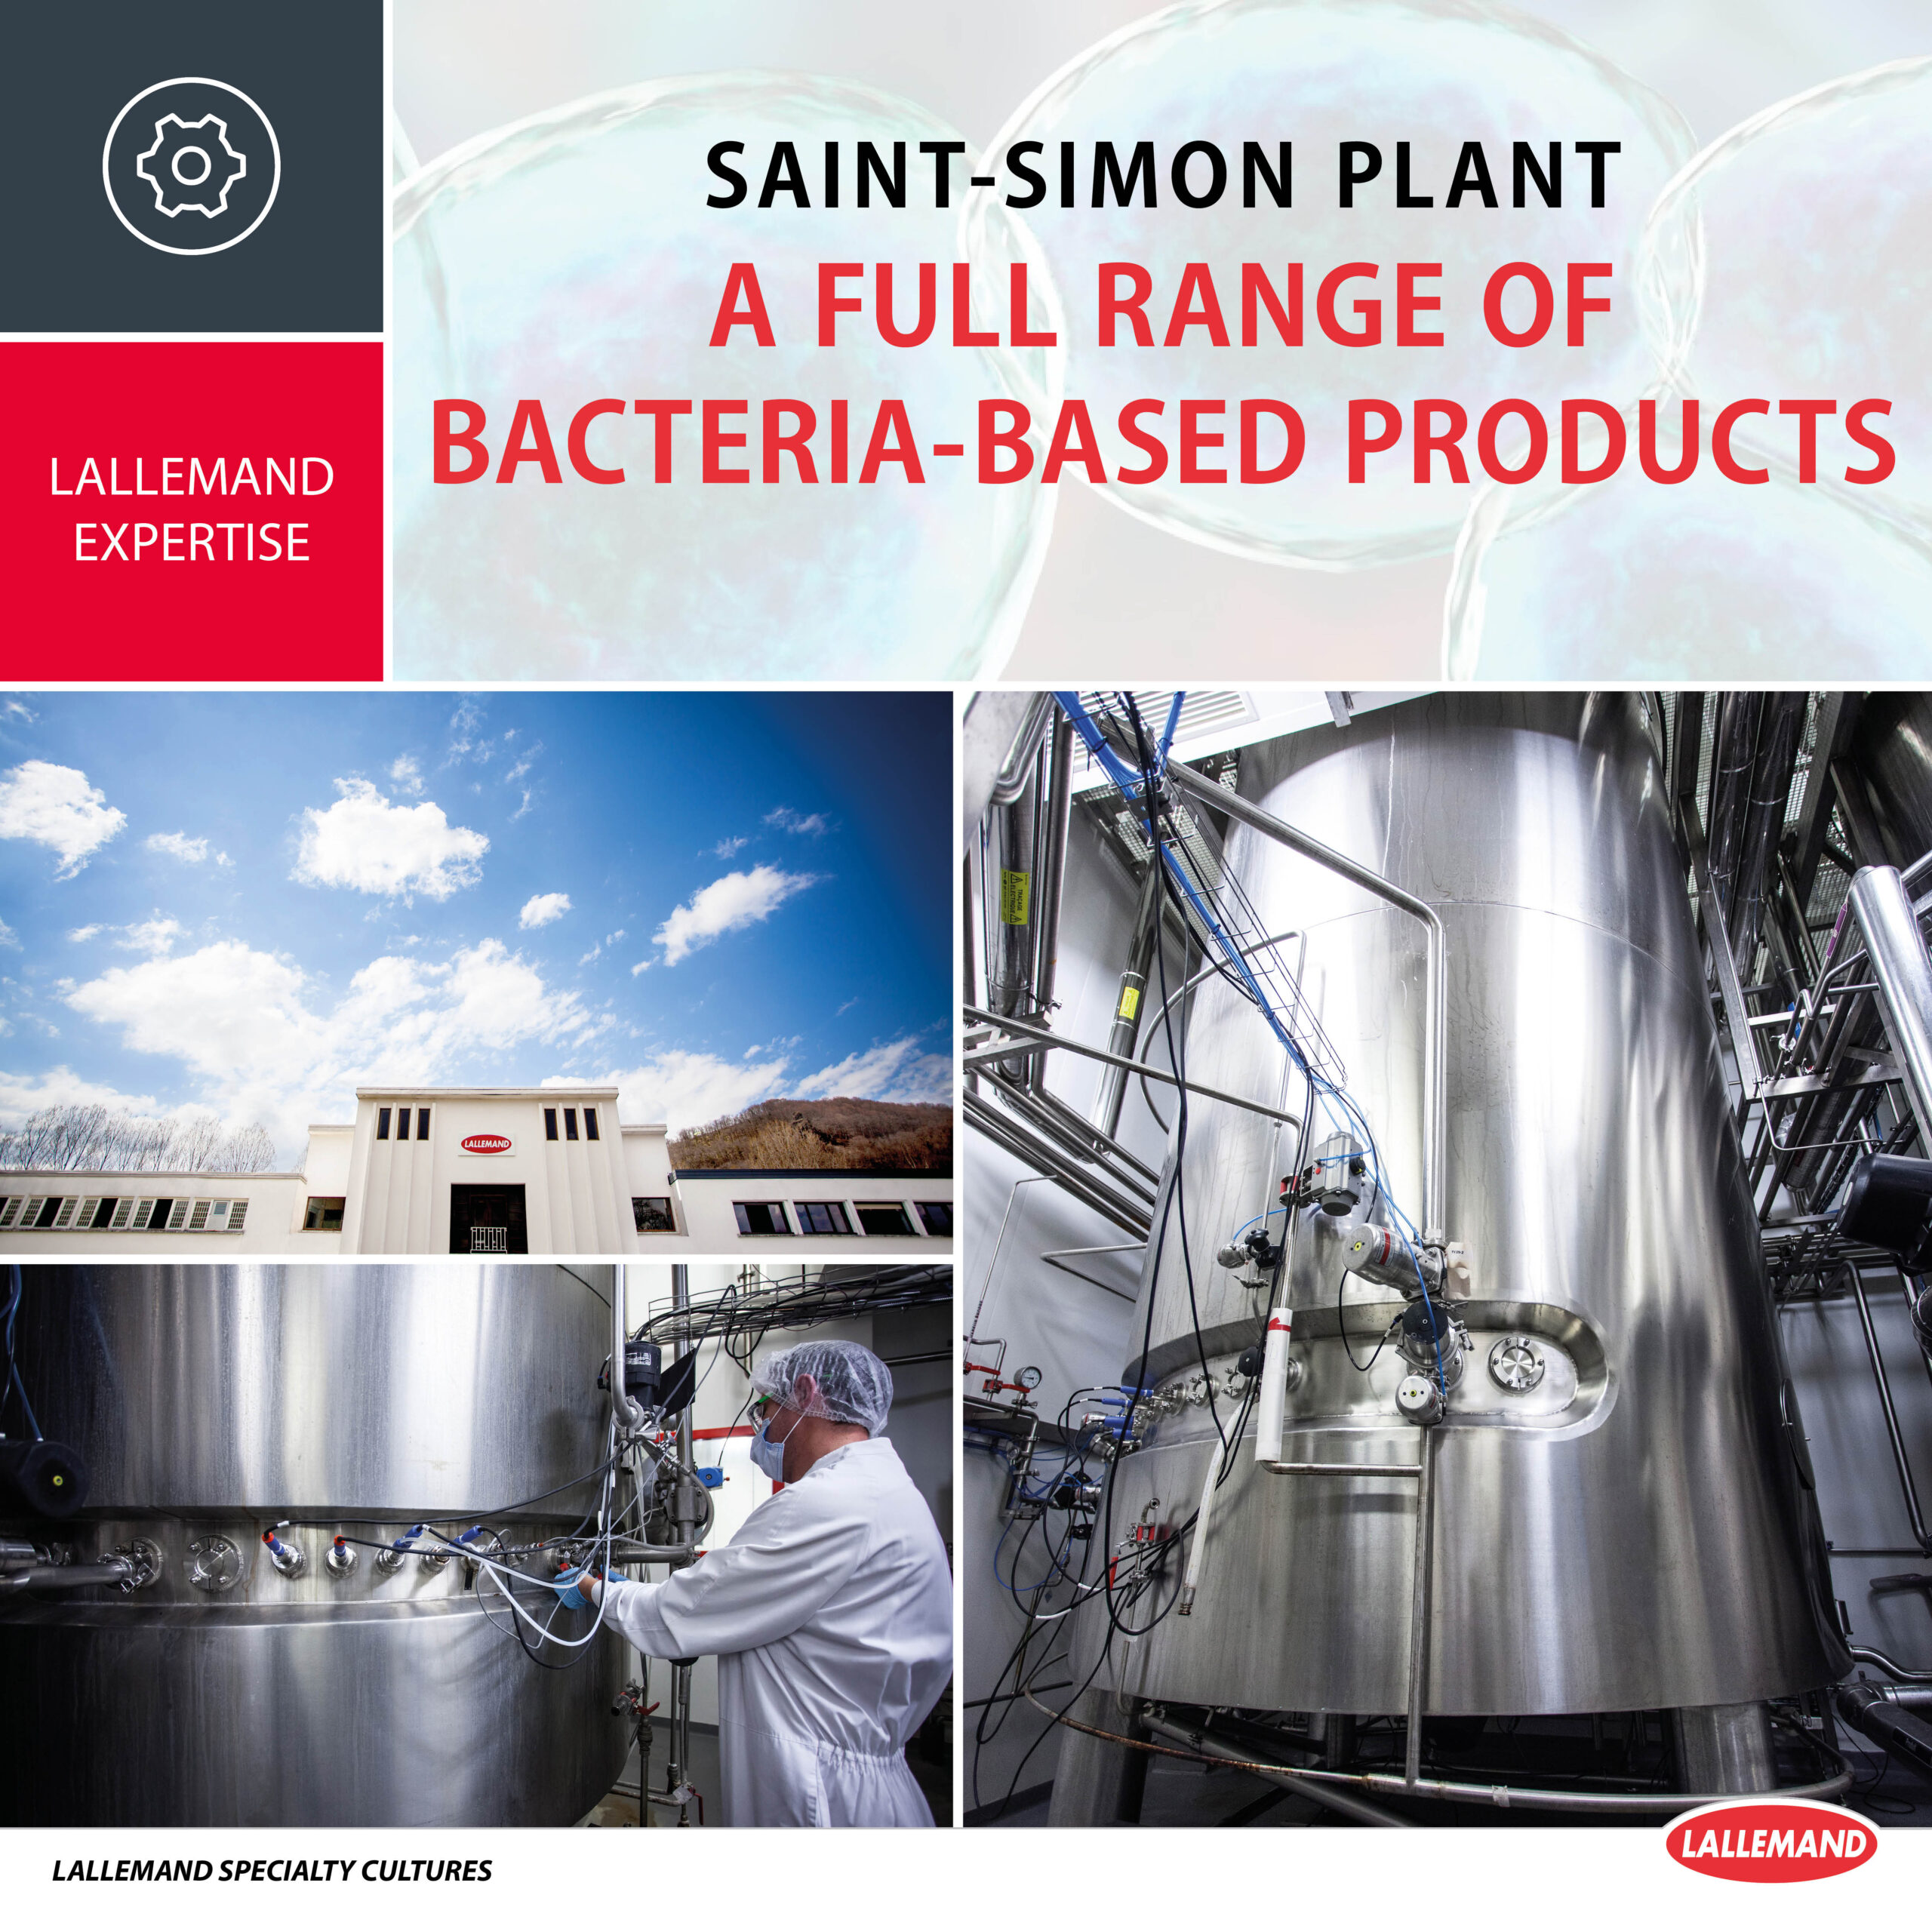 Saint-Simon plant, a full range of bacteria-based products